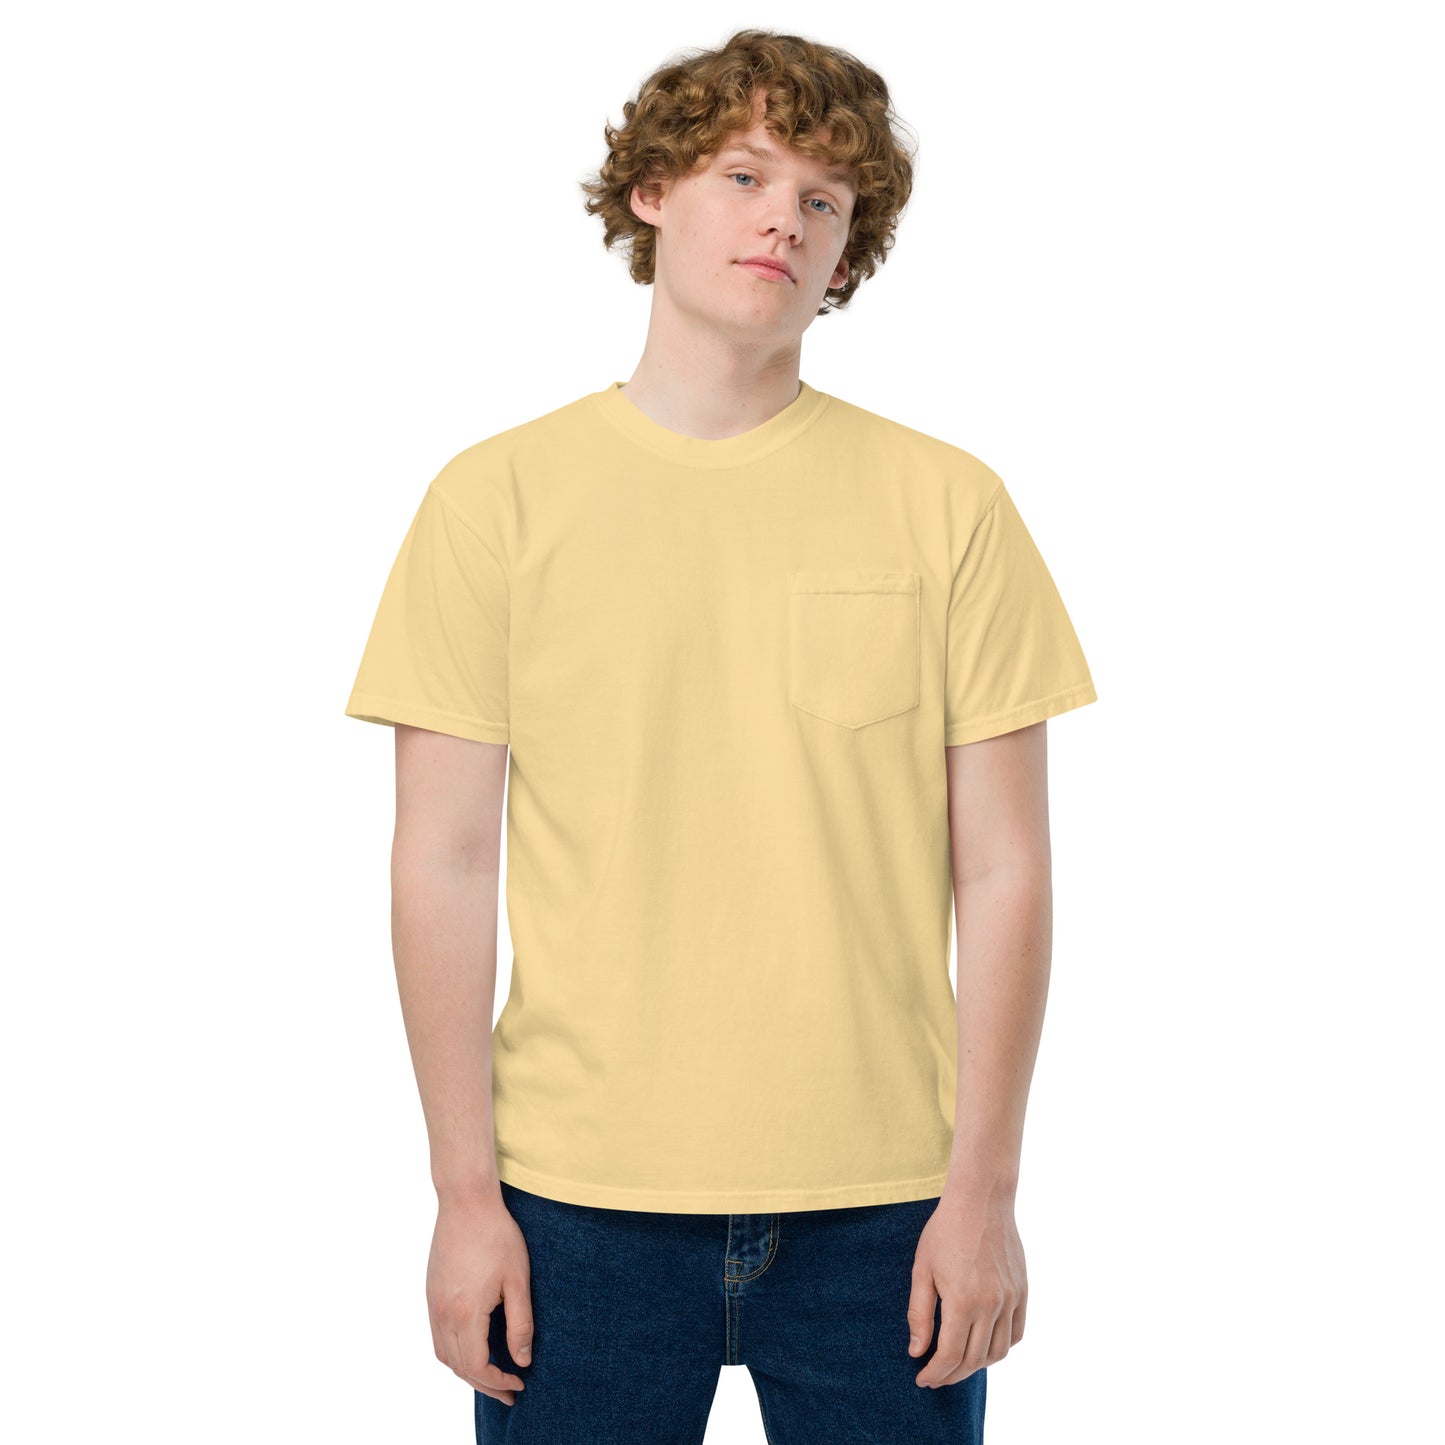 Tropical Sunset Adopt SRQ Unisex Pocket T-shirt